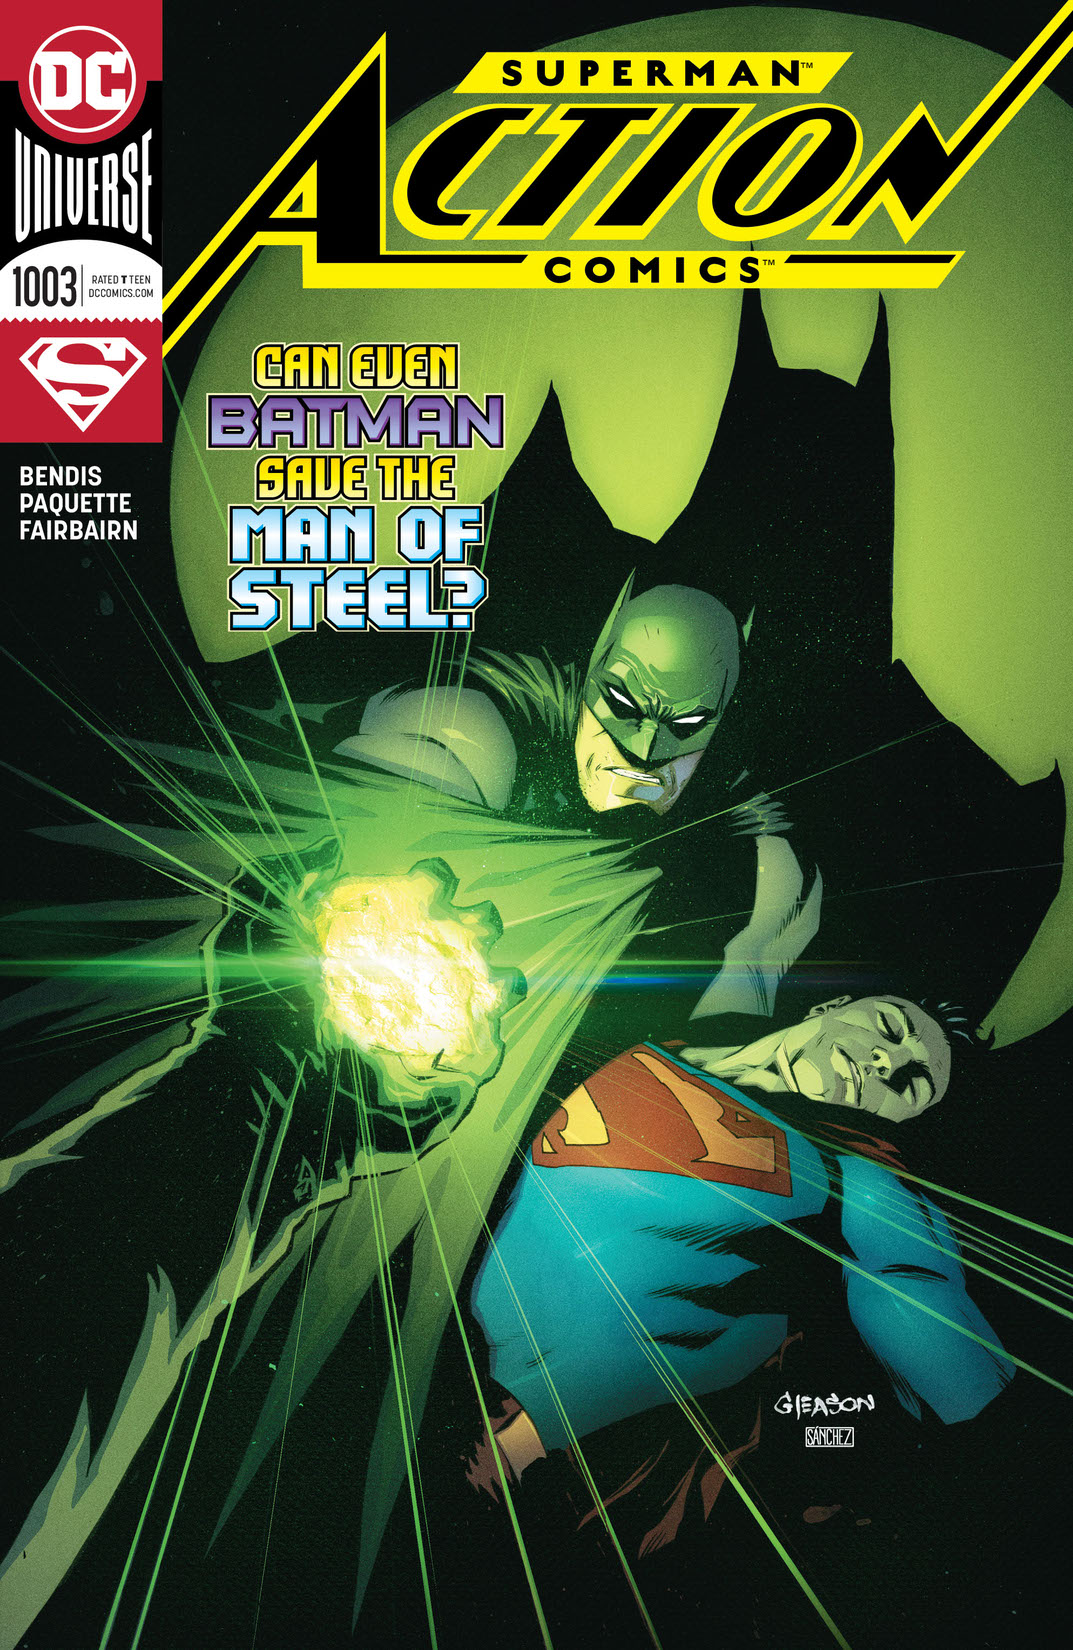 Action Comics (2016-) #1003 preview images